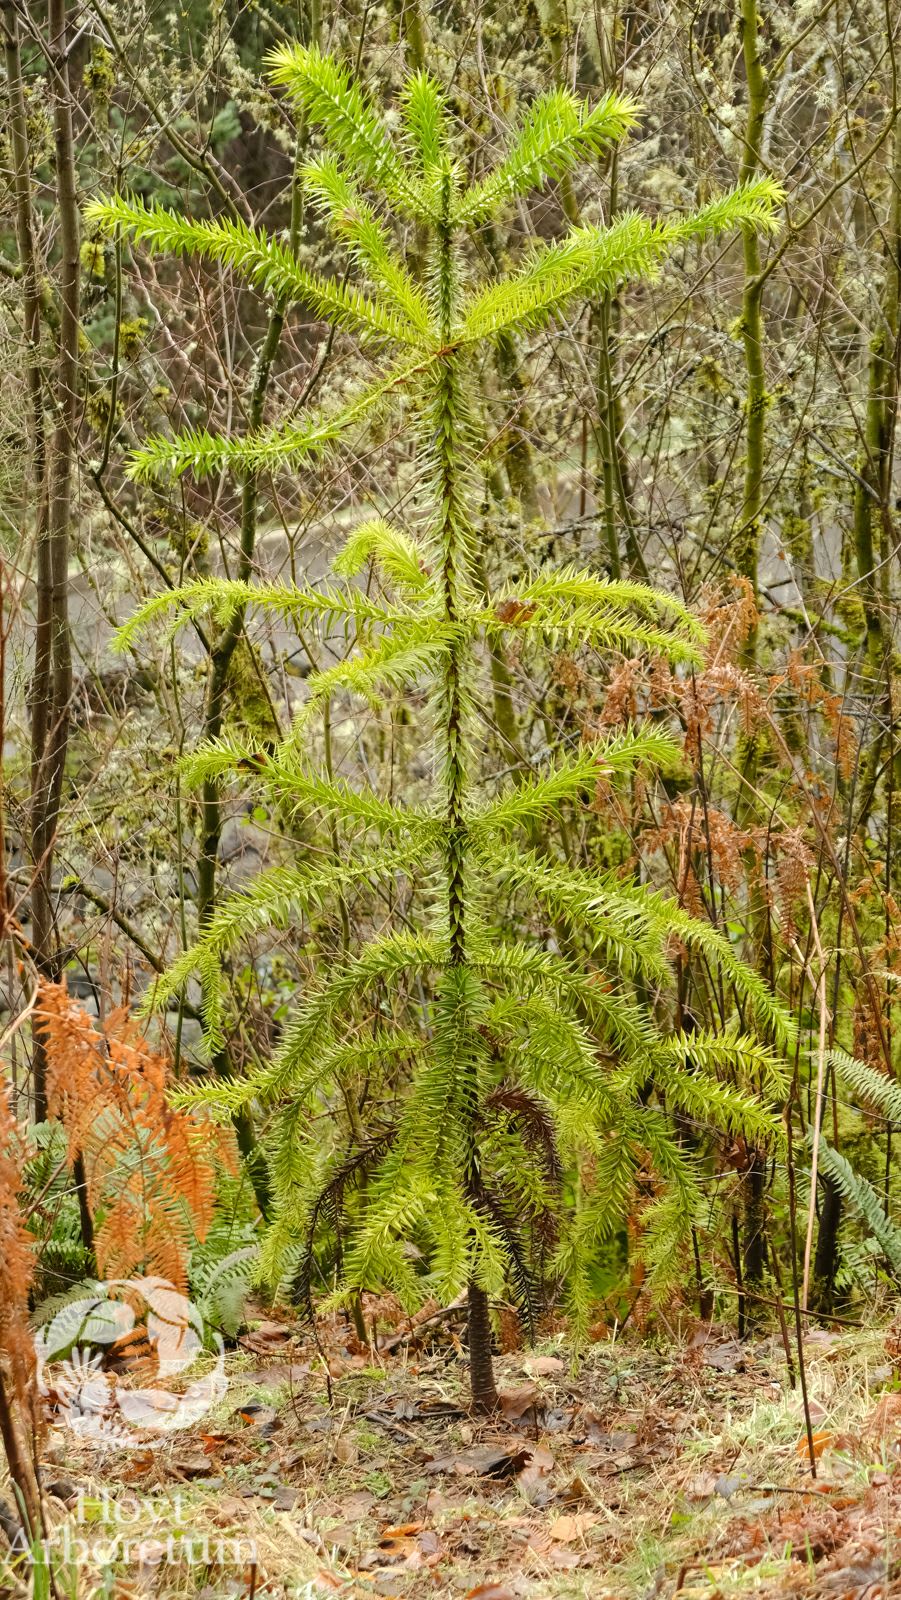 Araucaria angustifolia - Parana pine